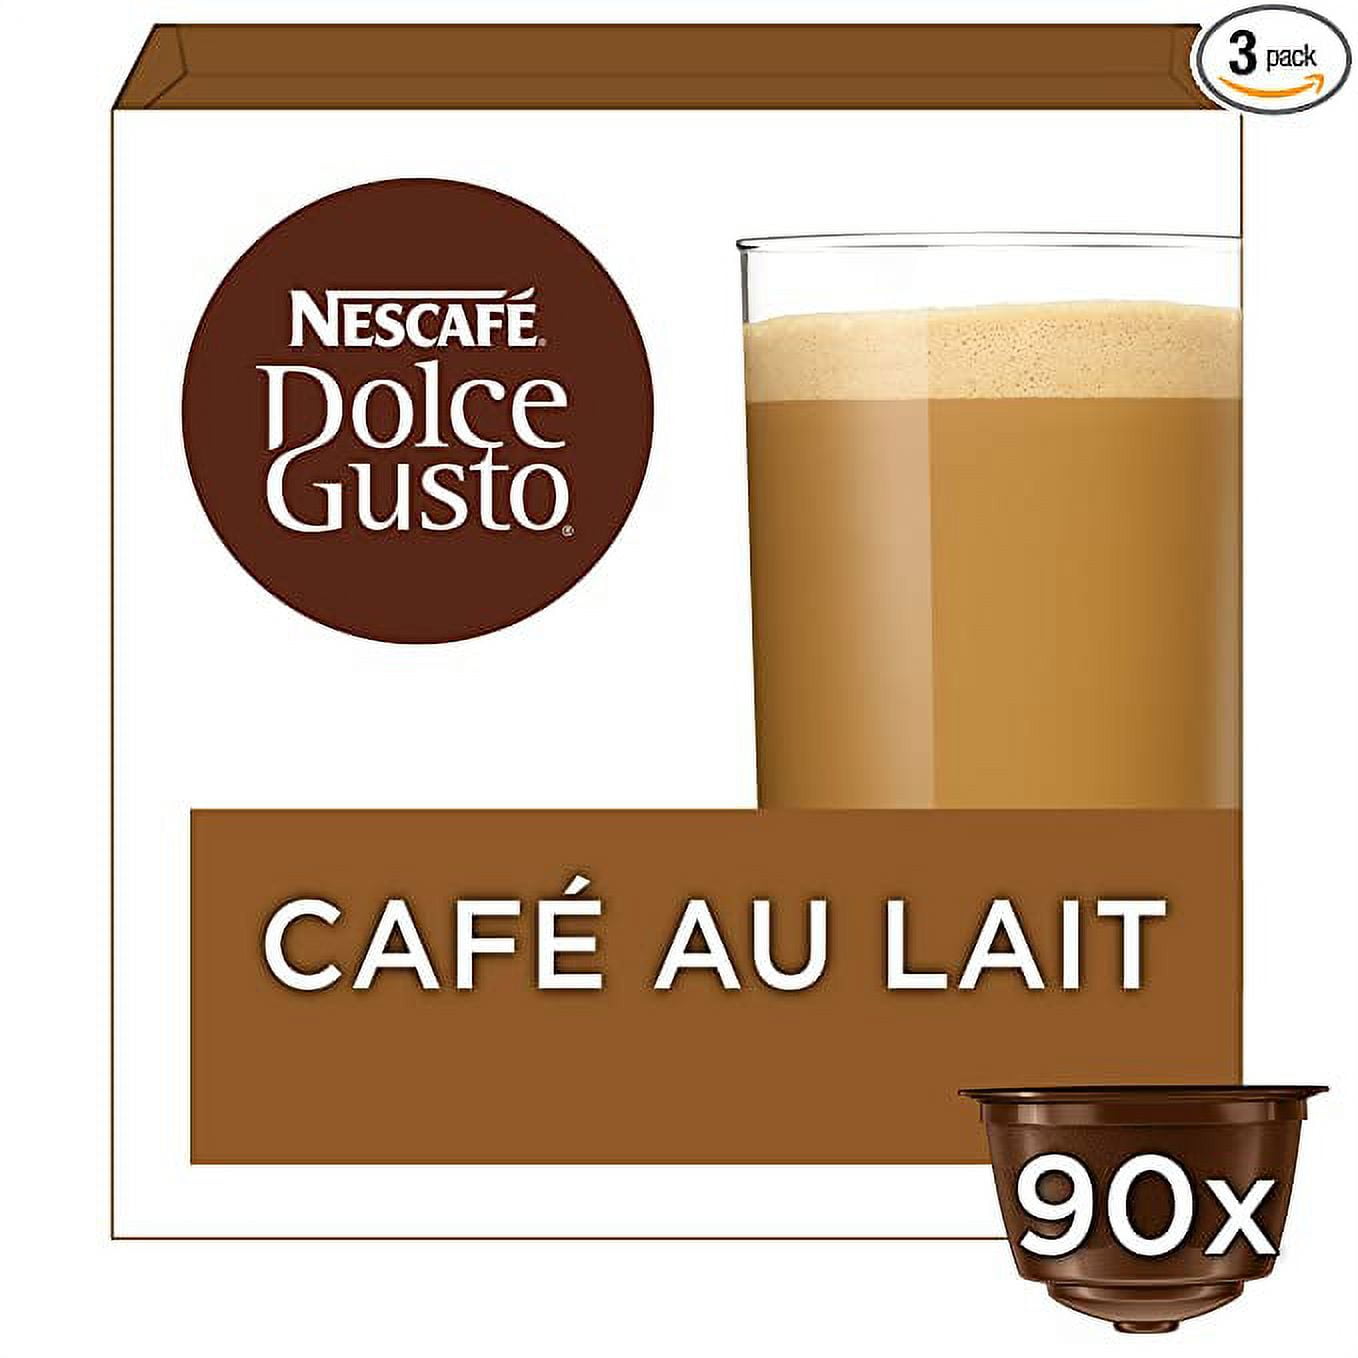 Nescafe Dolce Gusto Cafe Au